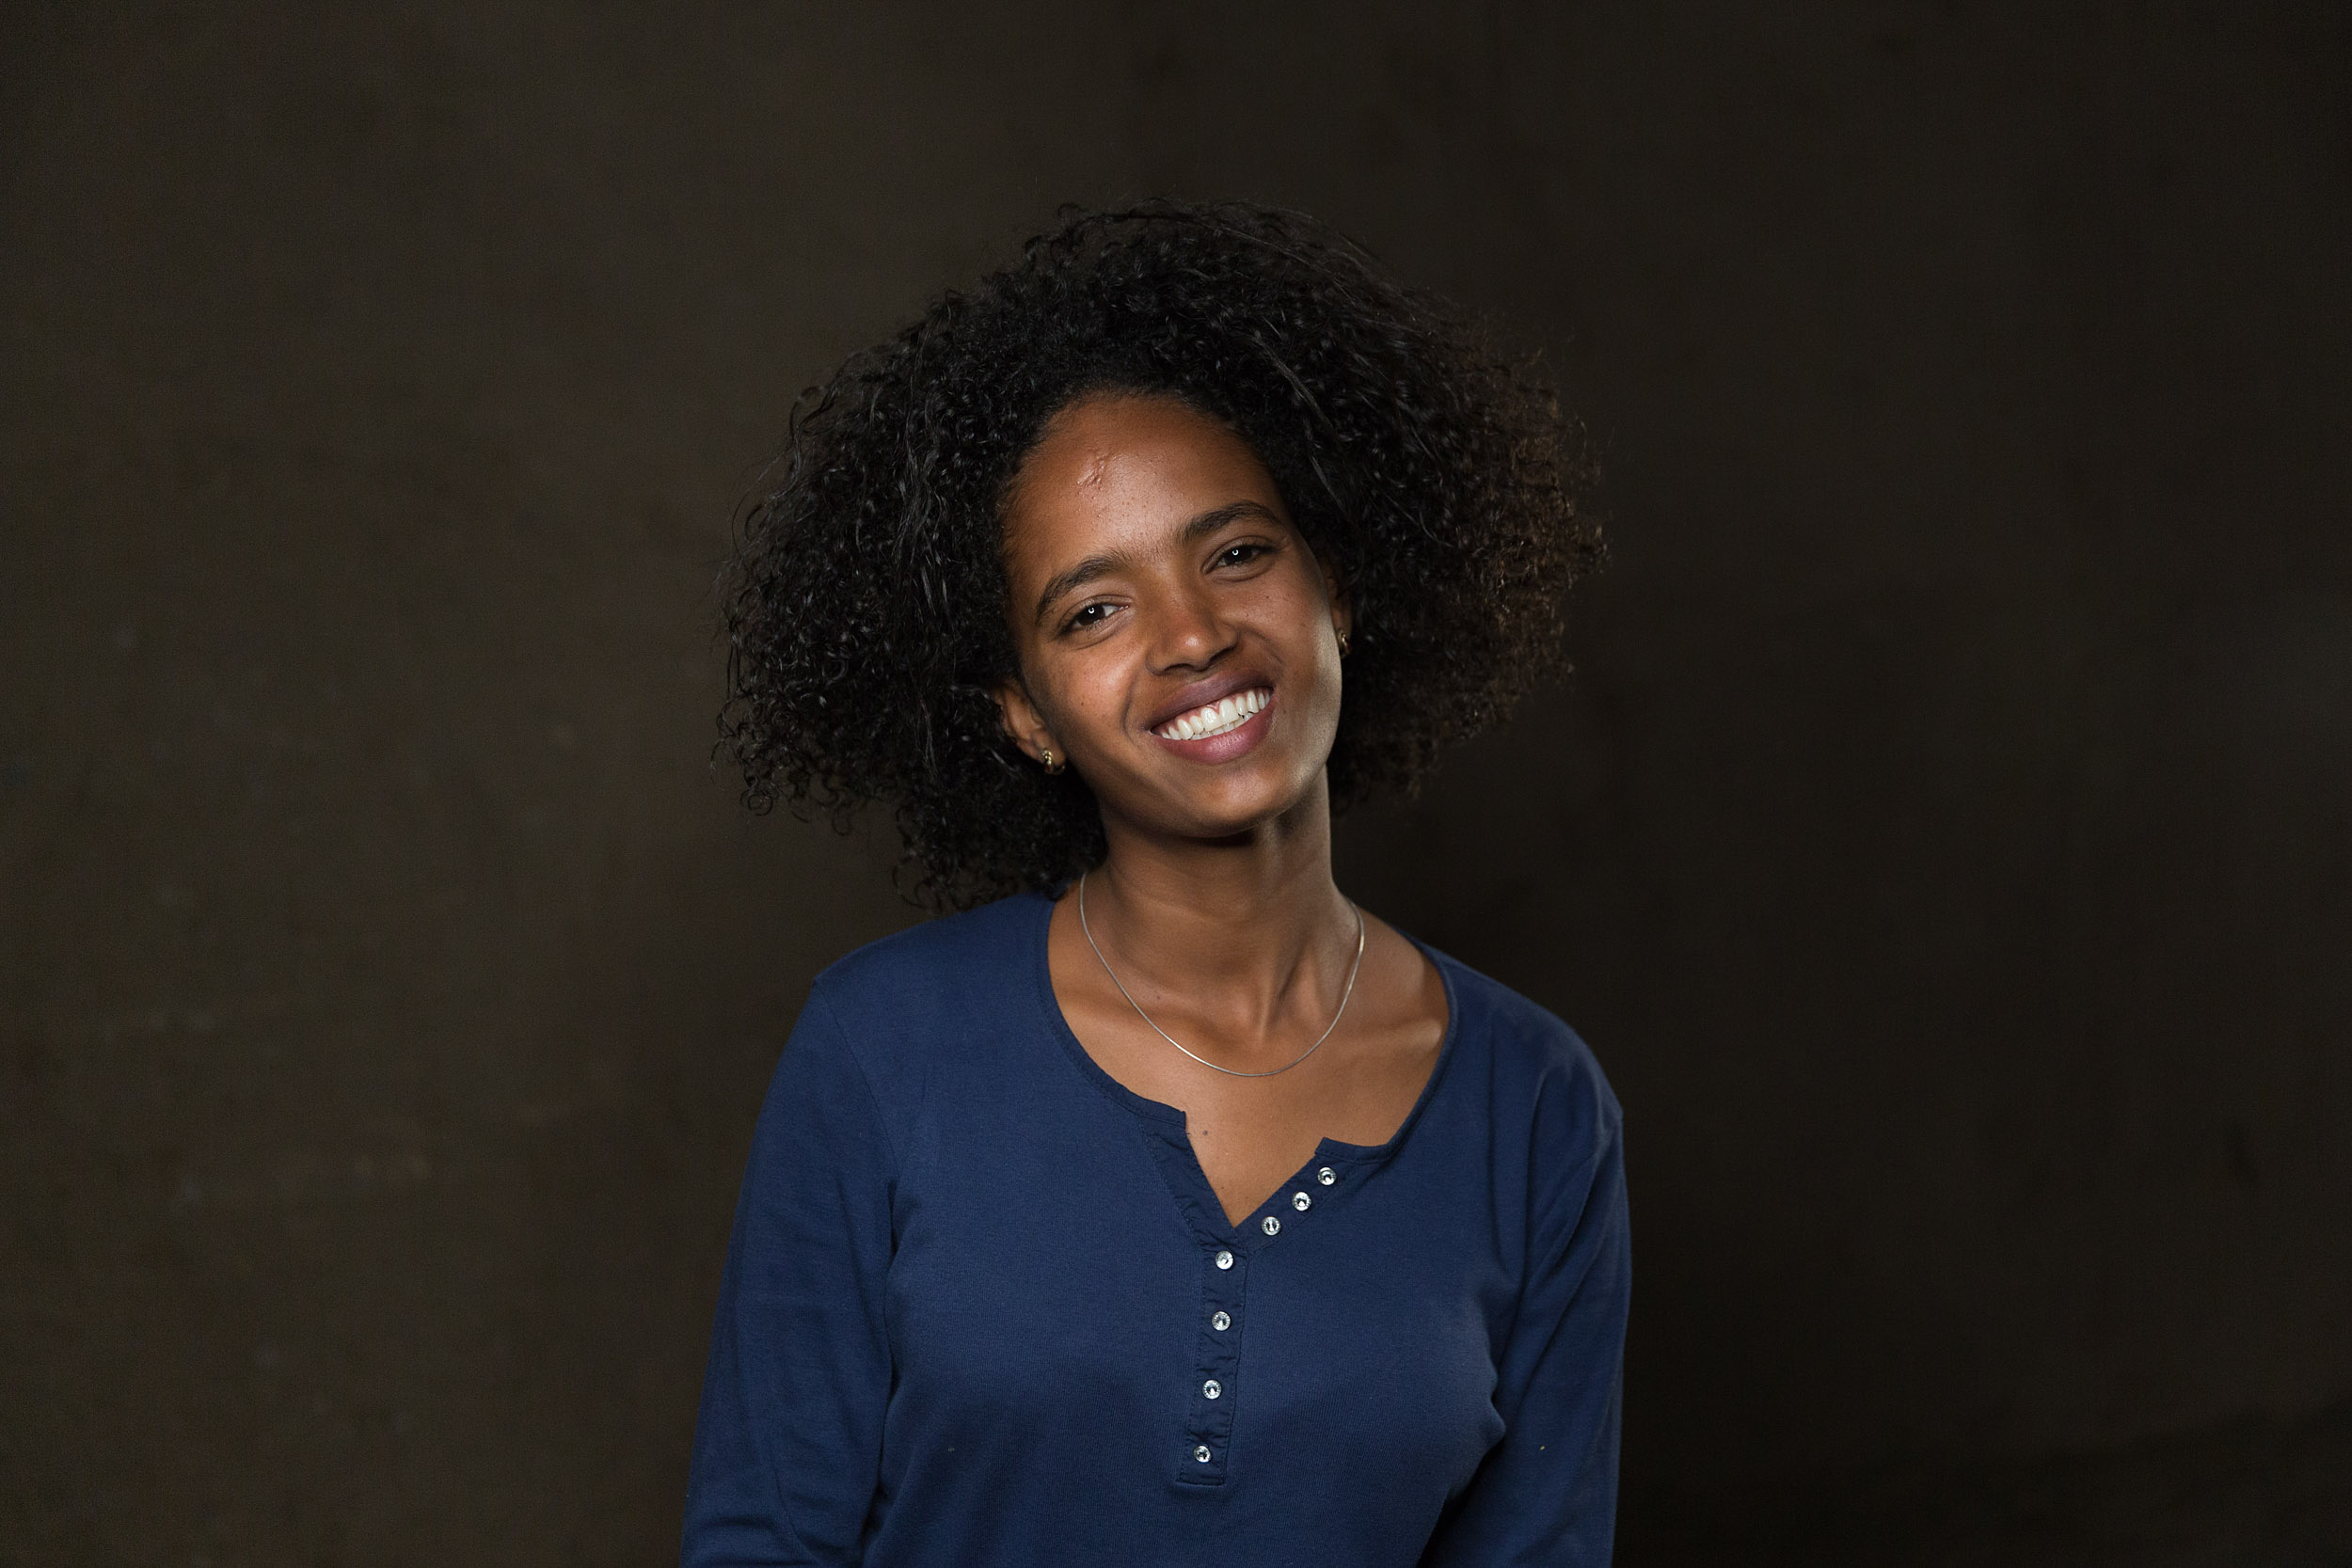 Etiopía para MOSSSolidaria y MCSPA - Fotografía Alberto Pla (31)